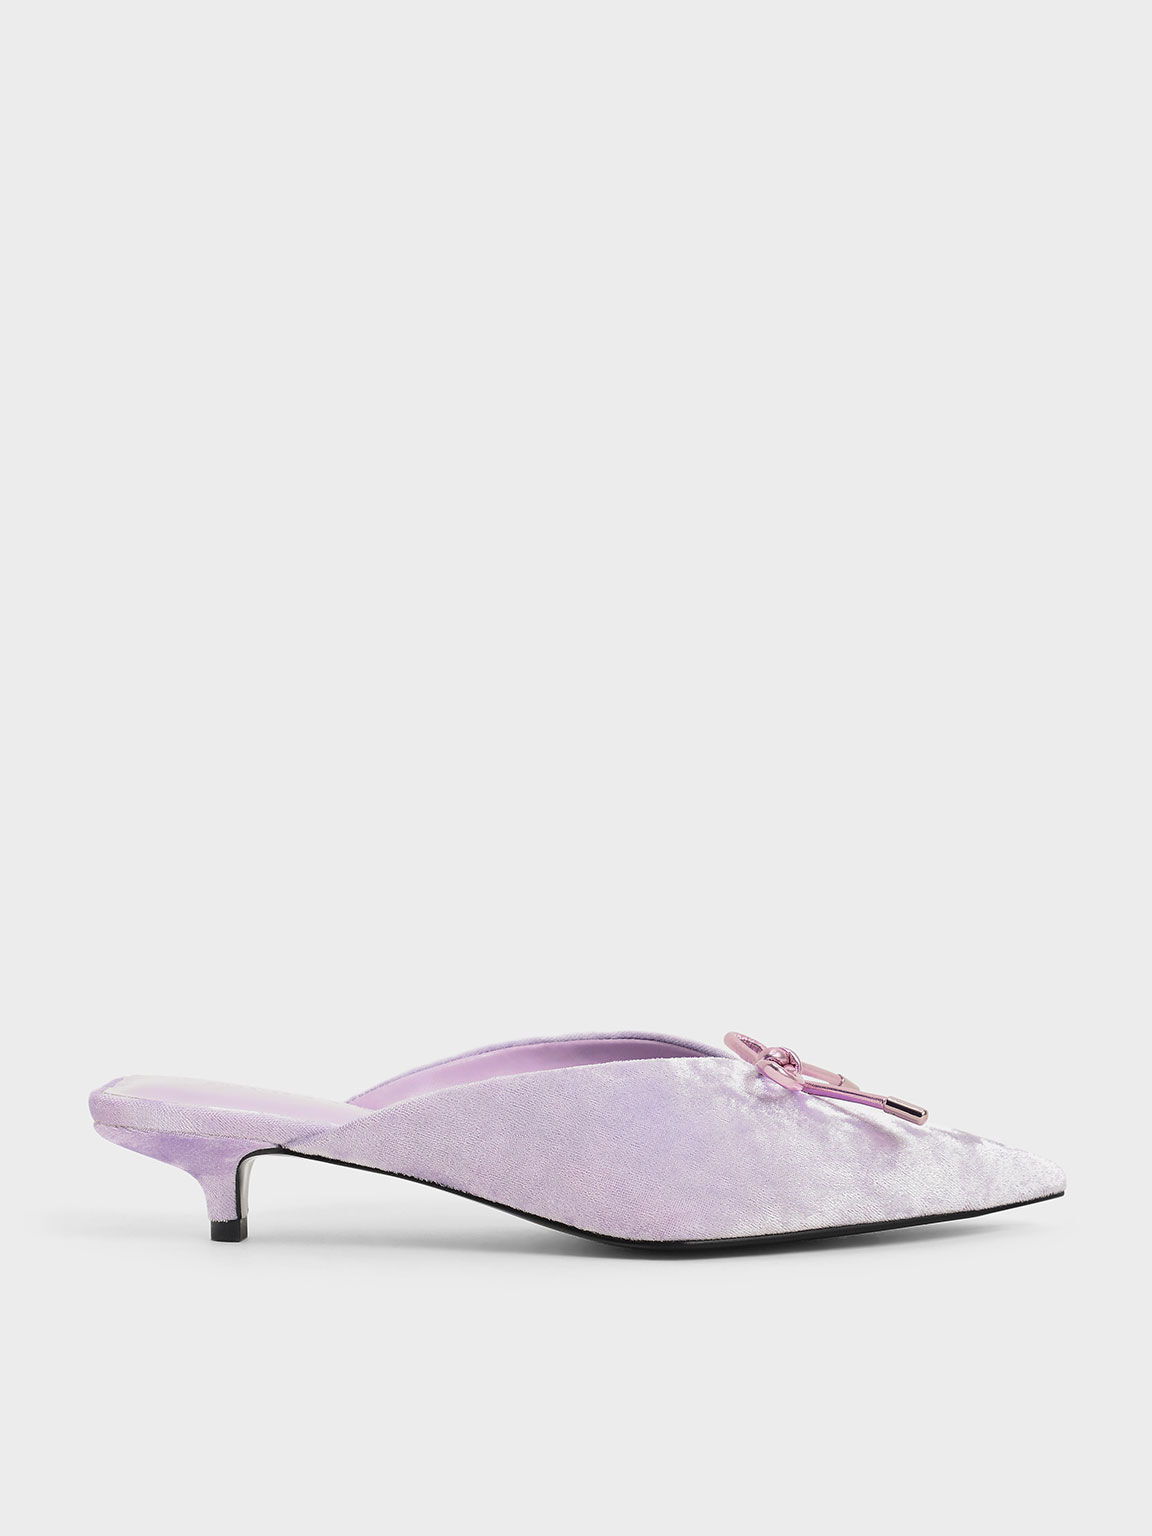 Azalea 尖頭低跟穆勒拖鞋, 紫丁香色, hi-res